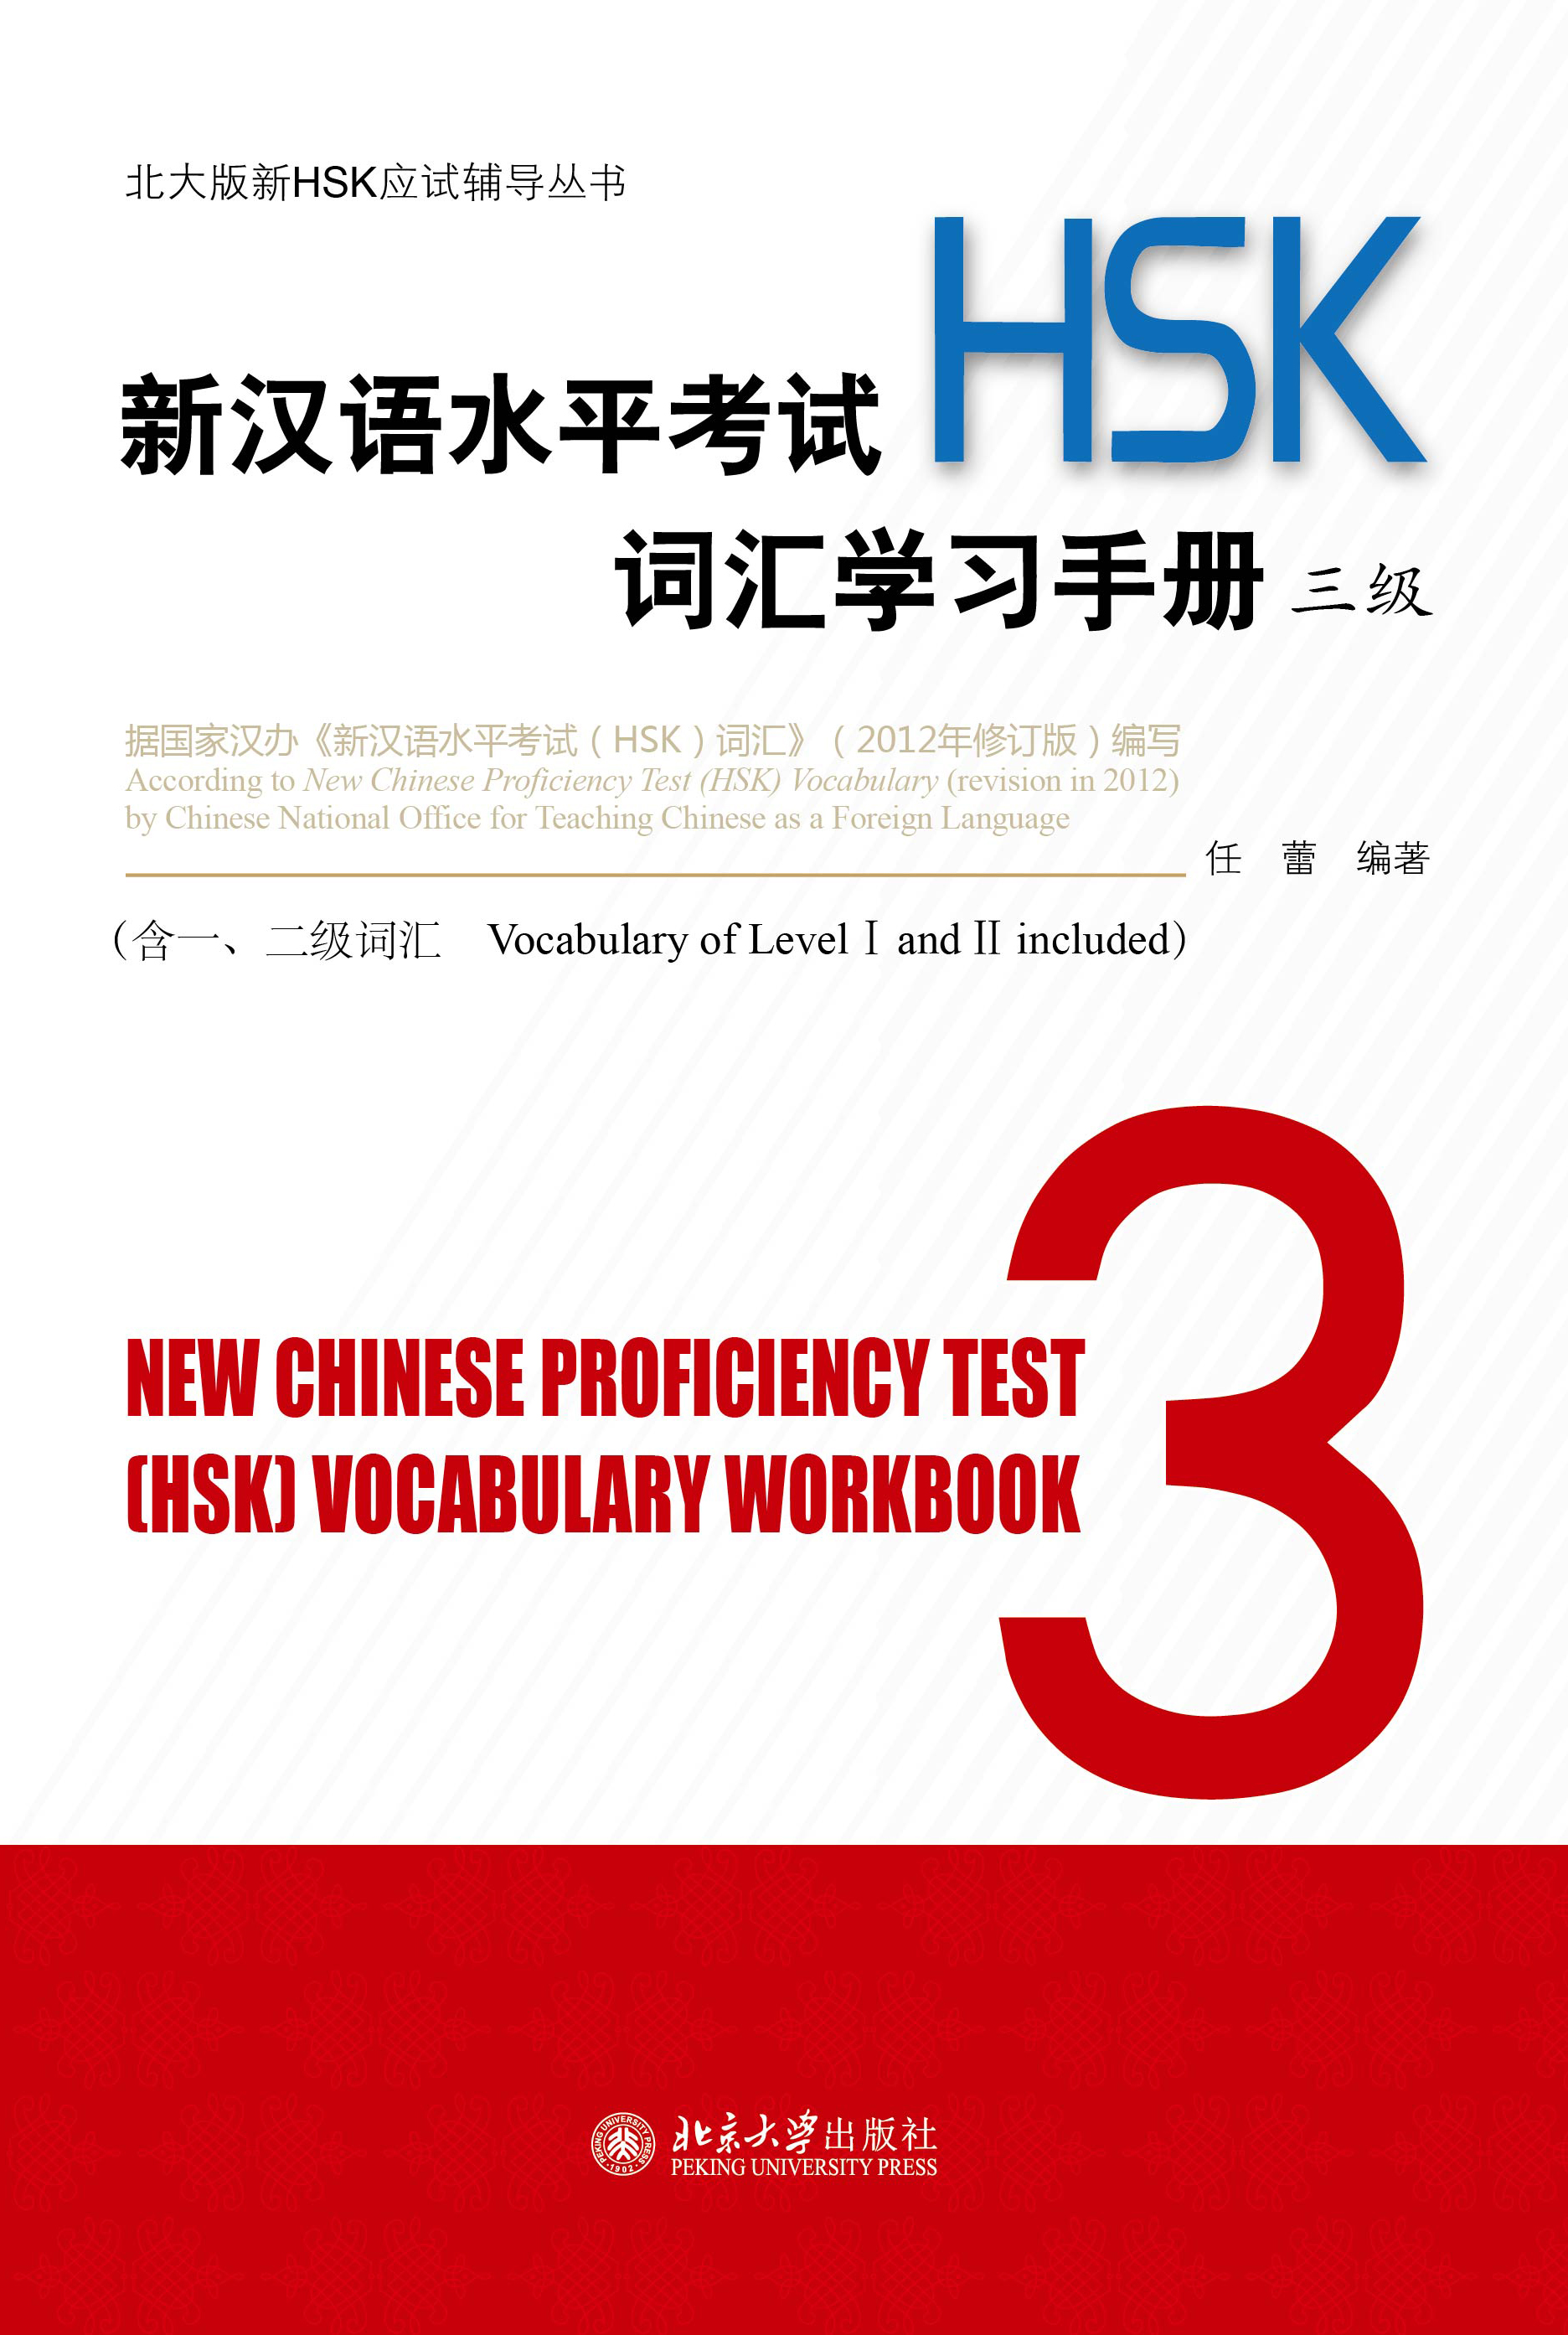 HSK New Chinese Proficiency Test Vocabulary Workbook 3<br>ISBN:978-7-301-21735-1, 9787301217351